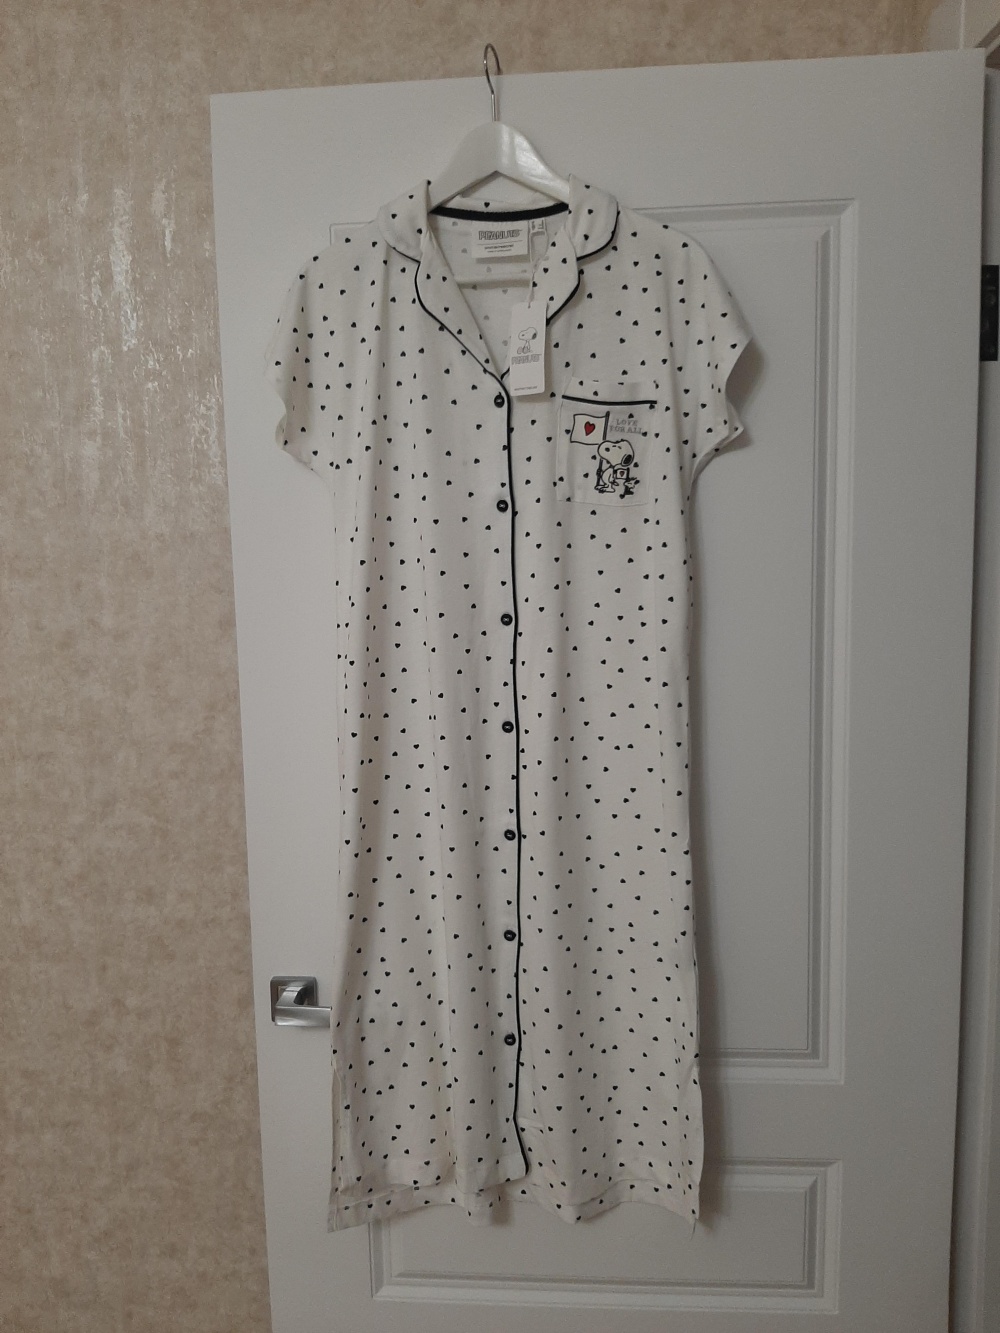 Ночная рубашка/домашнее платье Women'secret XS-S